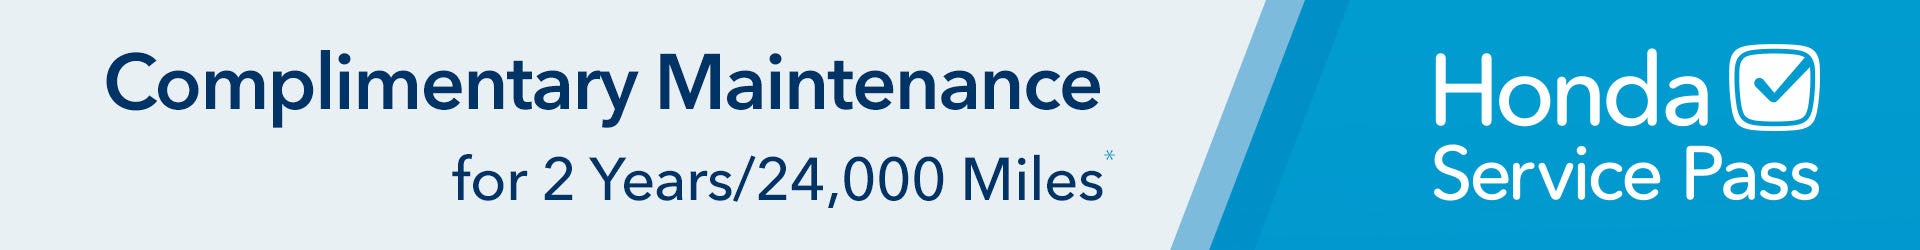 Complimentary Maintenance for 2 years / 24,000 Miles Honda Service Pass | Prince Honda in Tifton GA